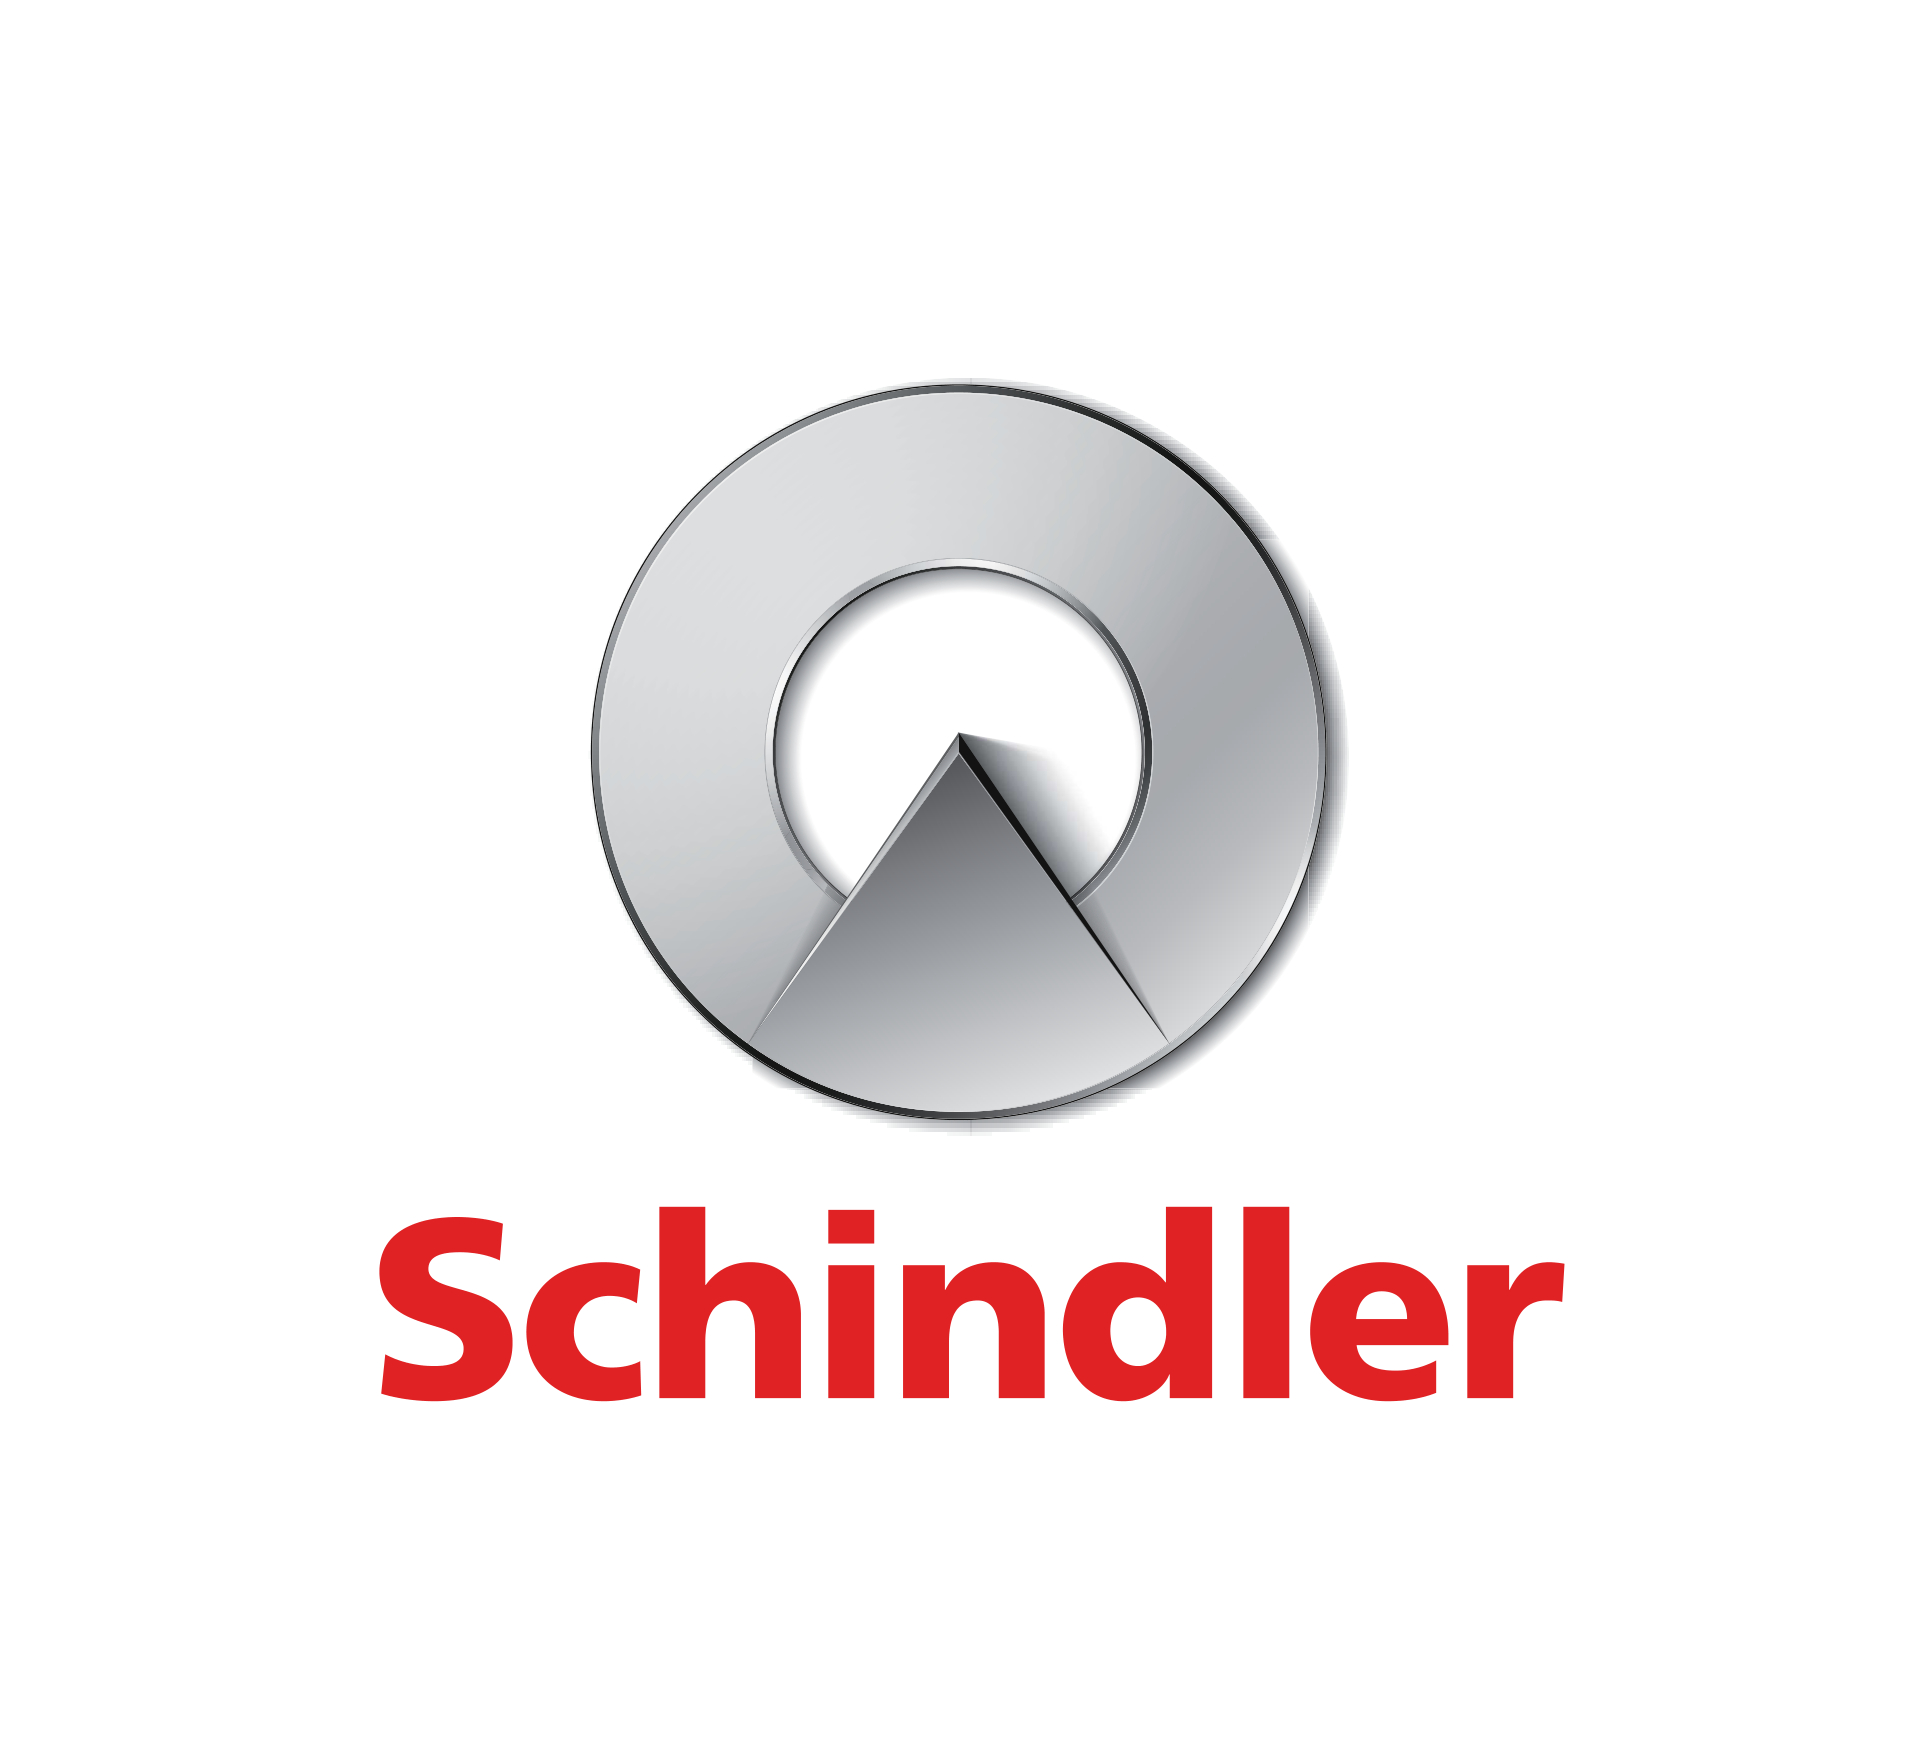 Schindler Logo, RGB, 1920x1759, JPG